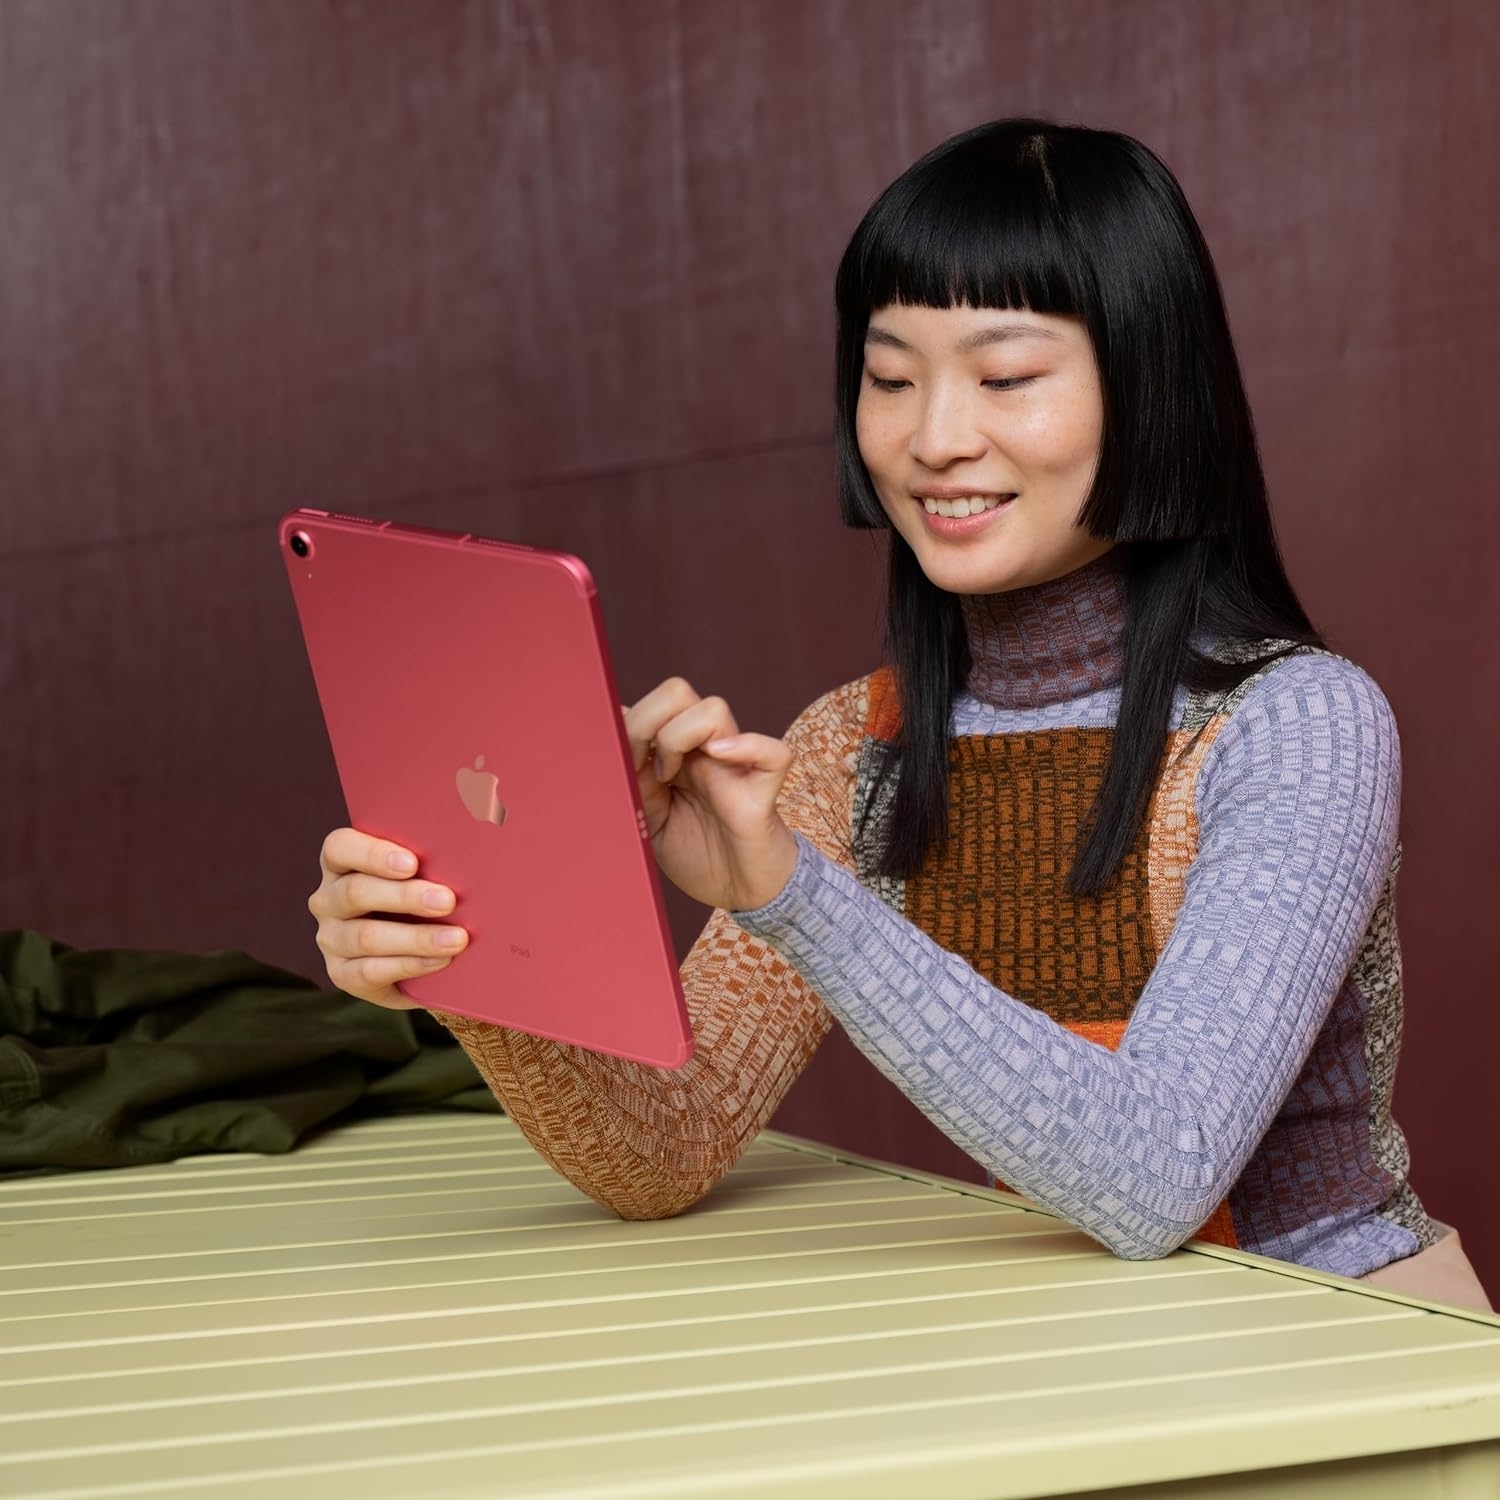 Model sitting, smiling at pink iPad